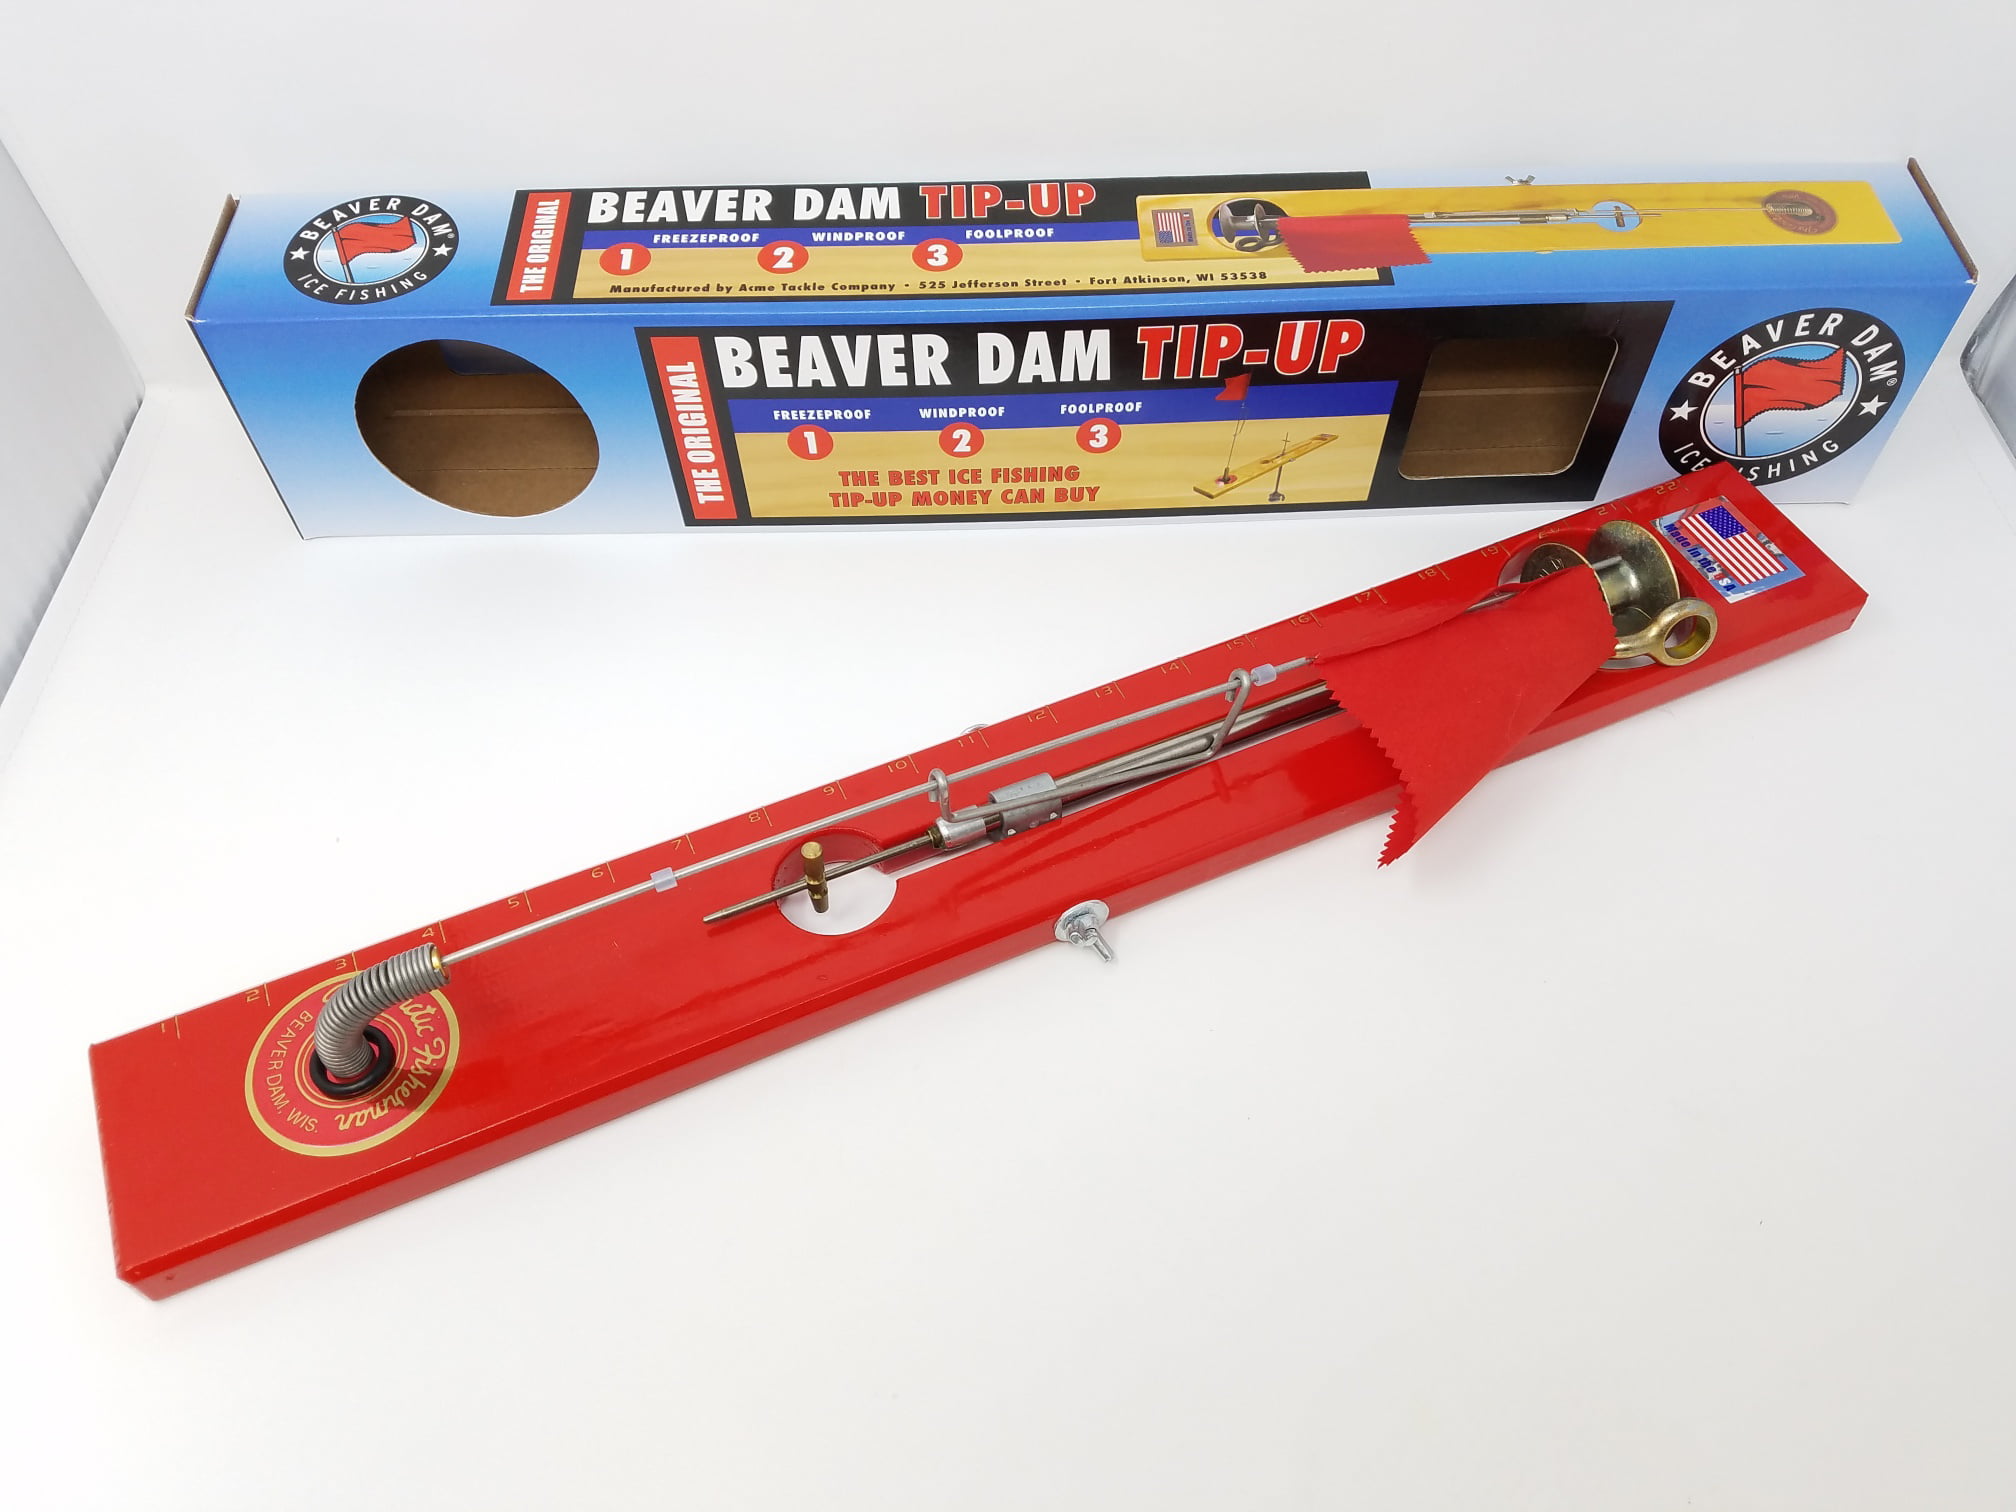 Beaver Dam Tip-up Original Red on Red 